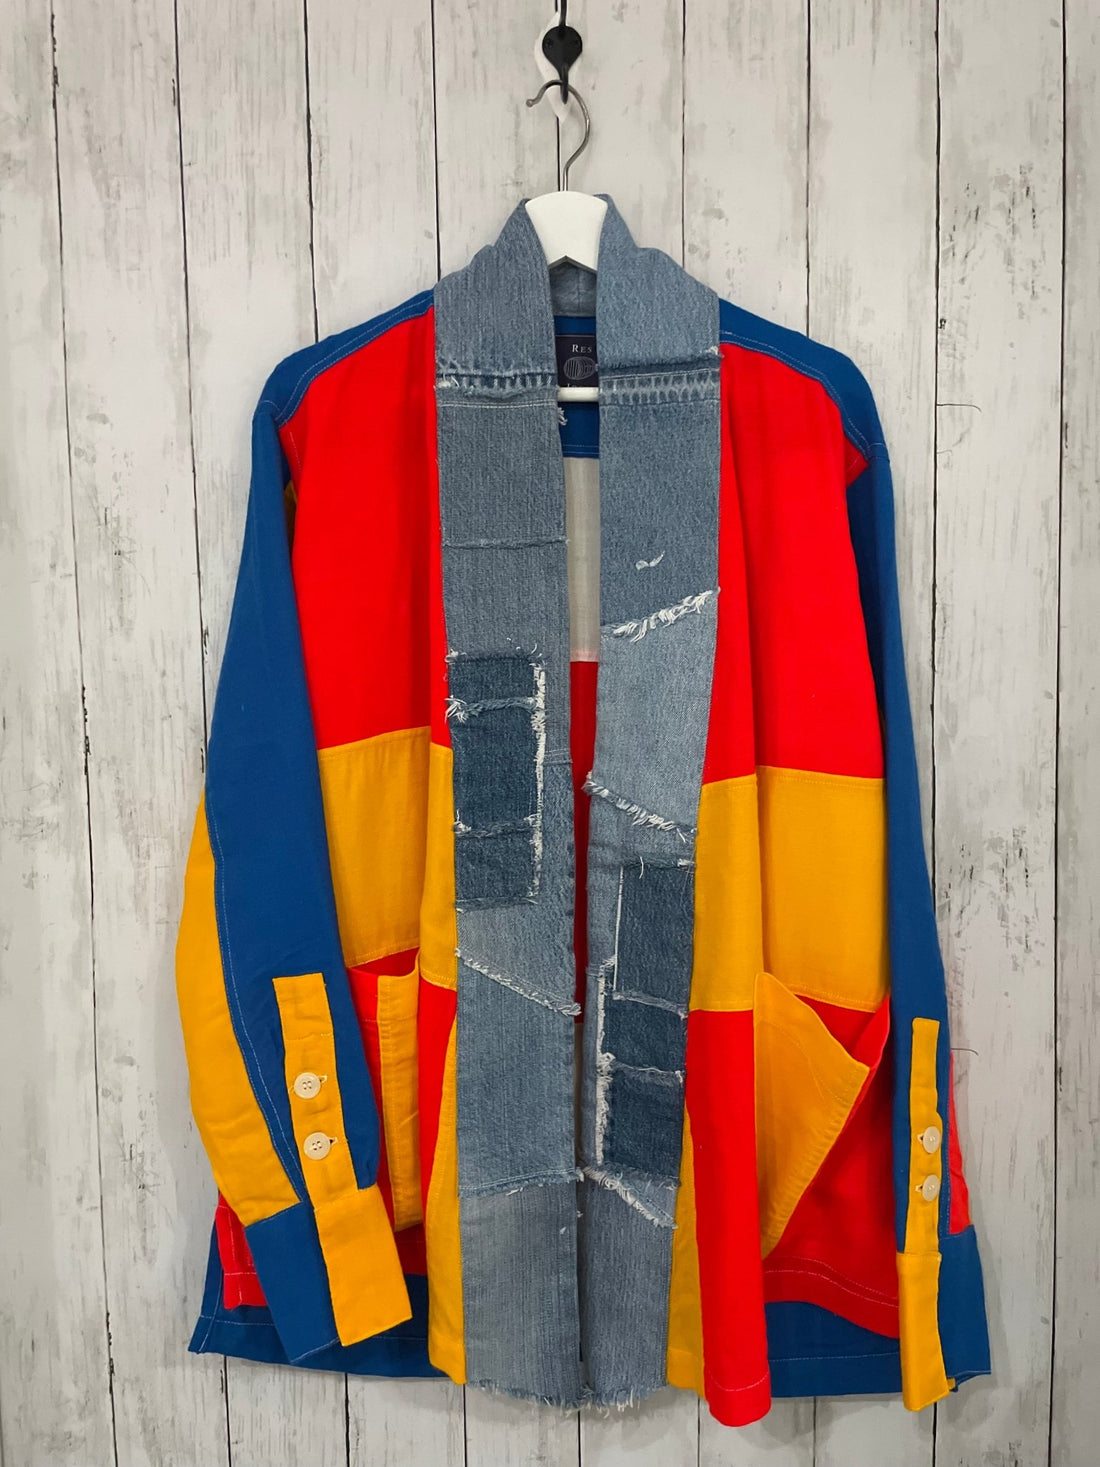 Introducing Vintage Signal Flag Kimonos | RES IPSA - RES IPSA